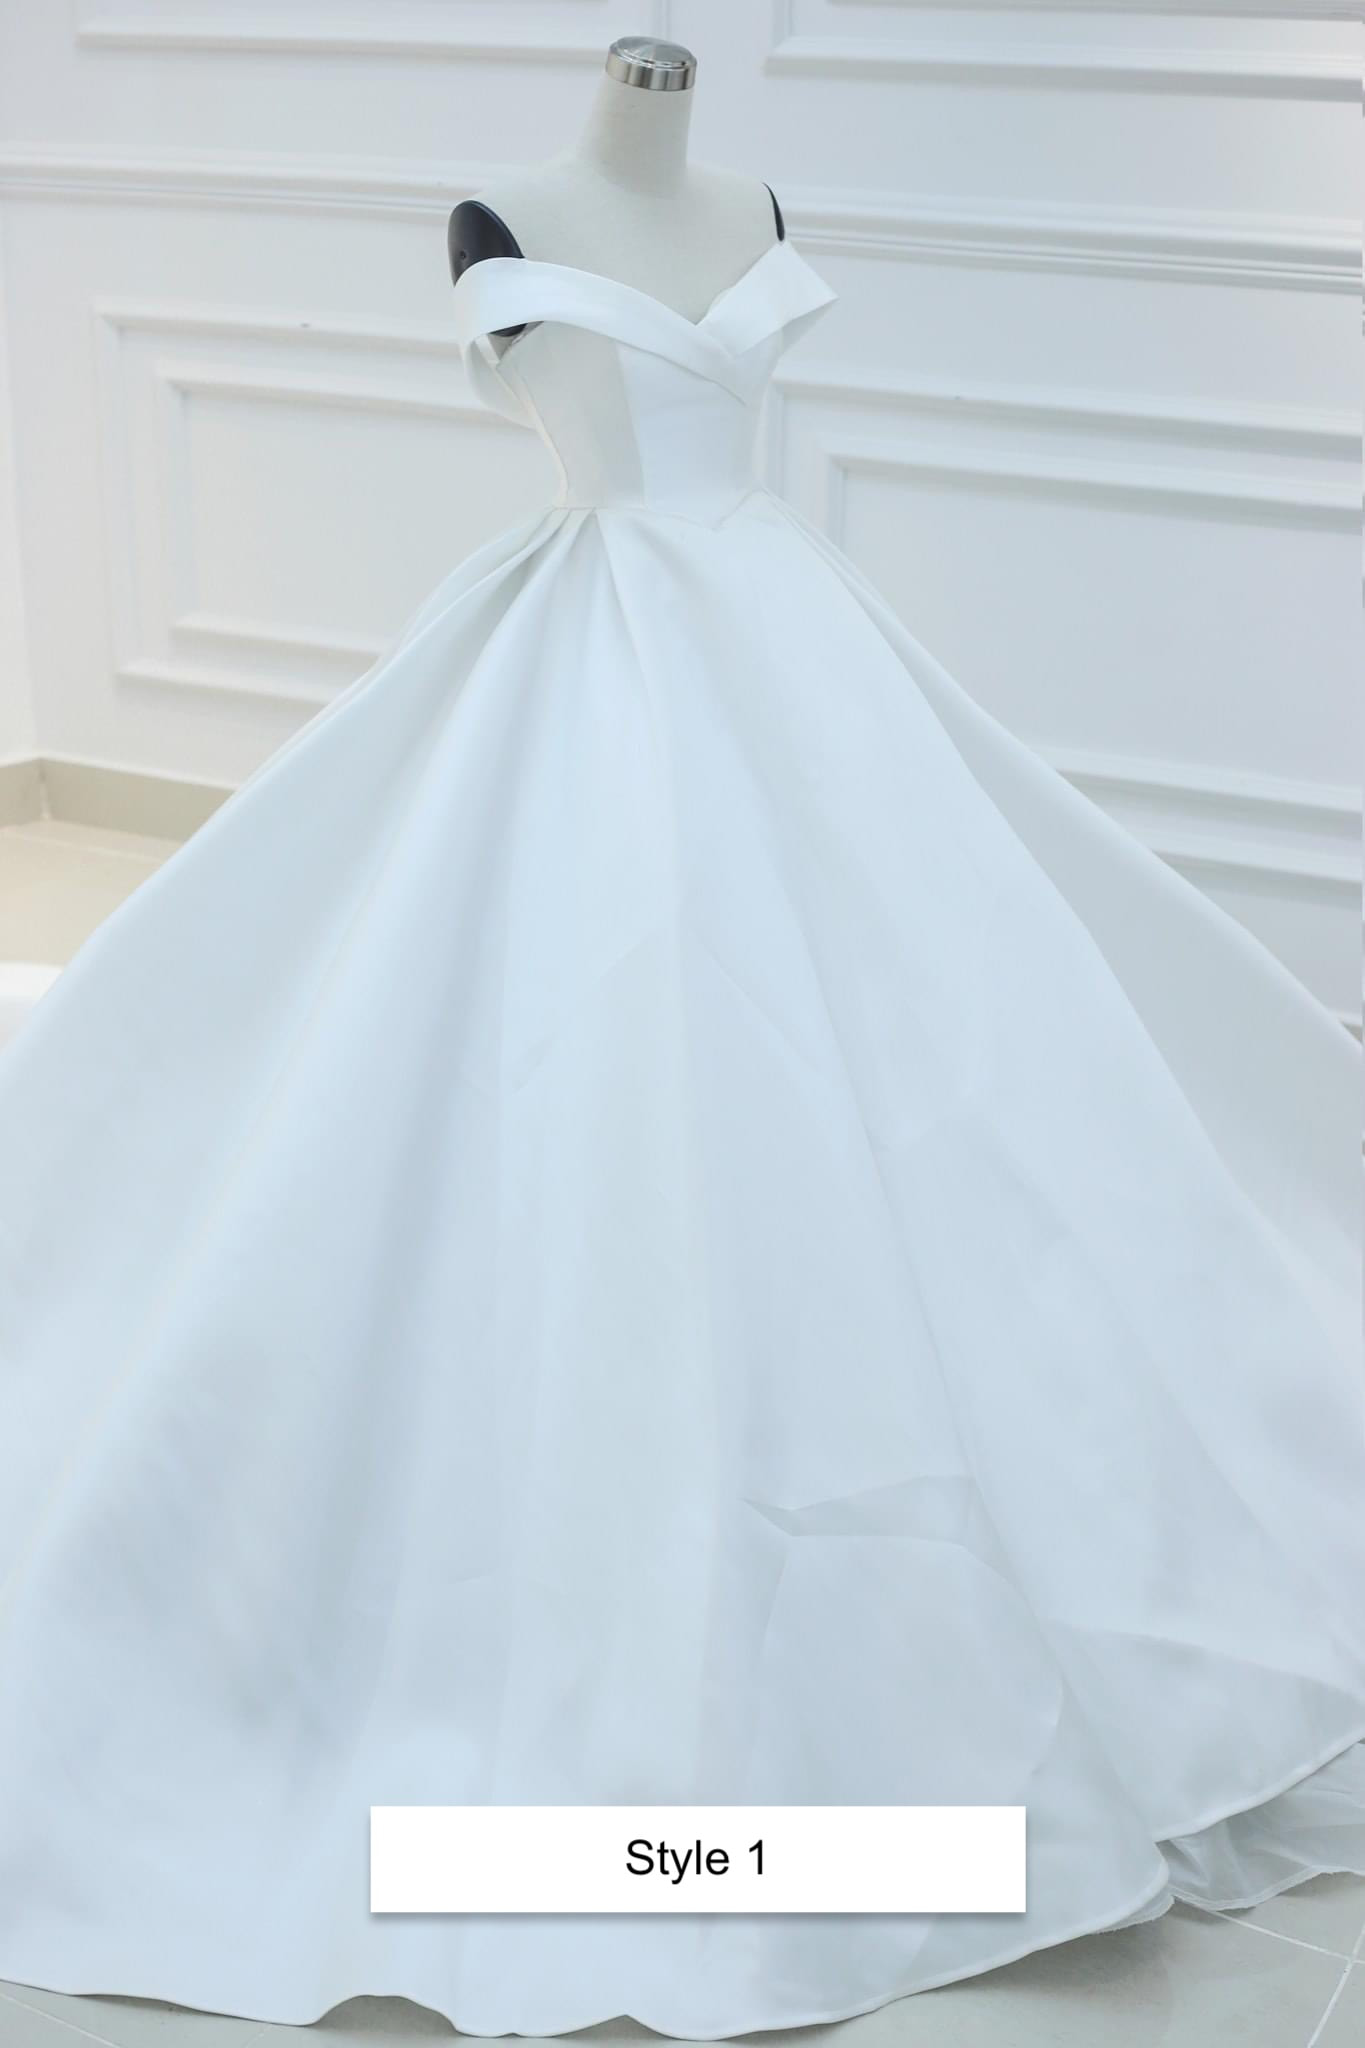 White Formal Dresses & Evening Gowns for Women - UCenter Dress